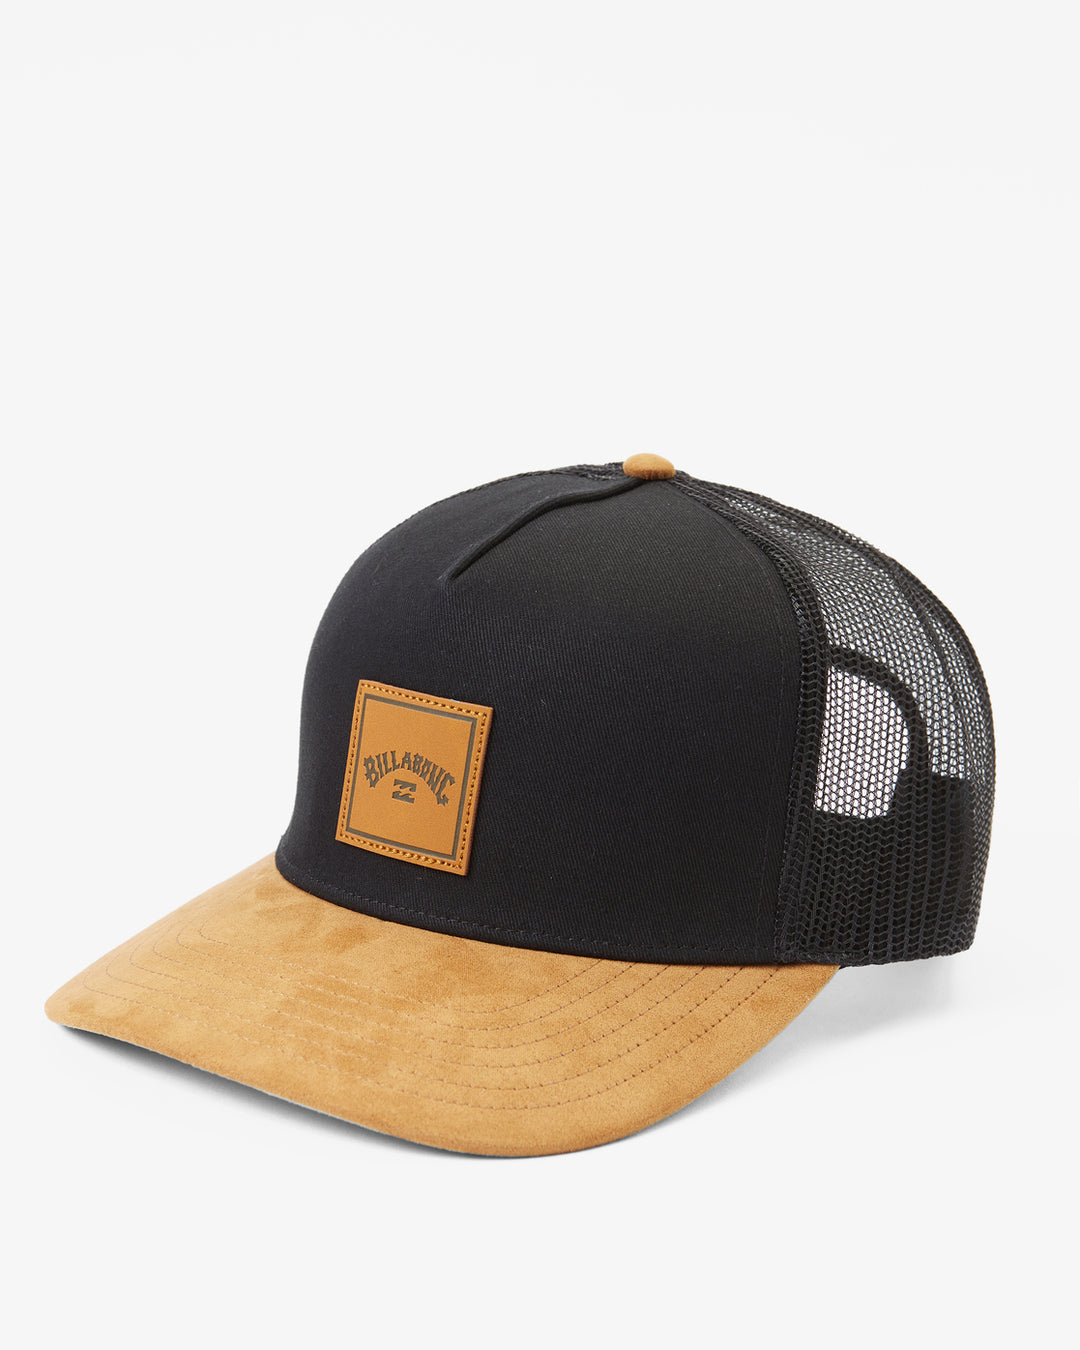 Billabong Sun – Diego Hat - Trucker Stacked Black/Tan Boardshop